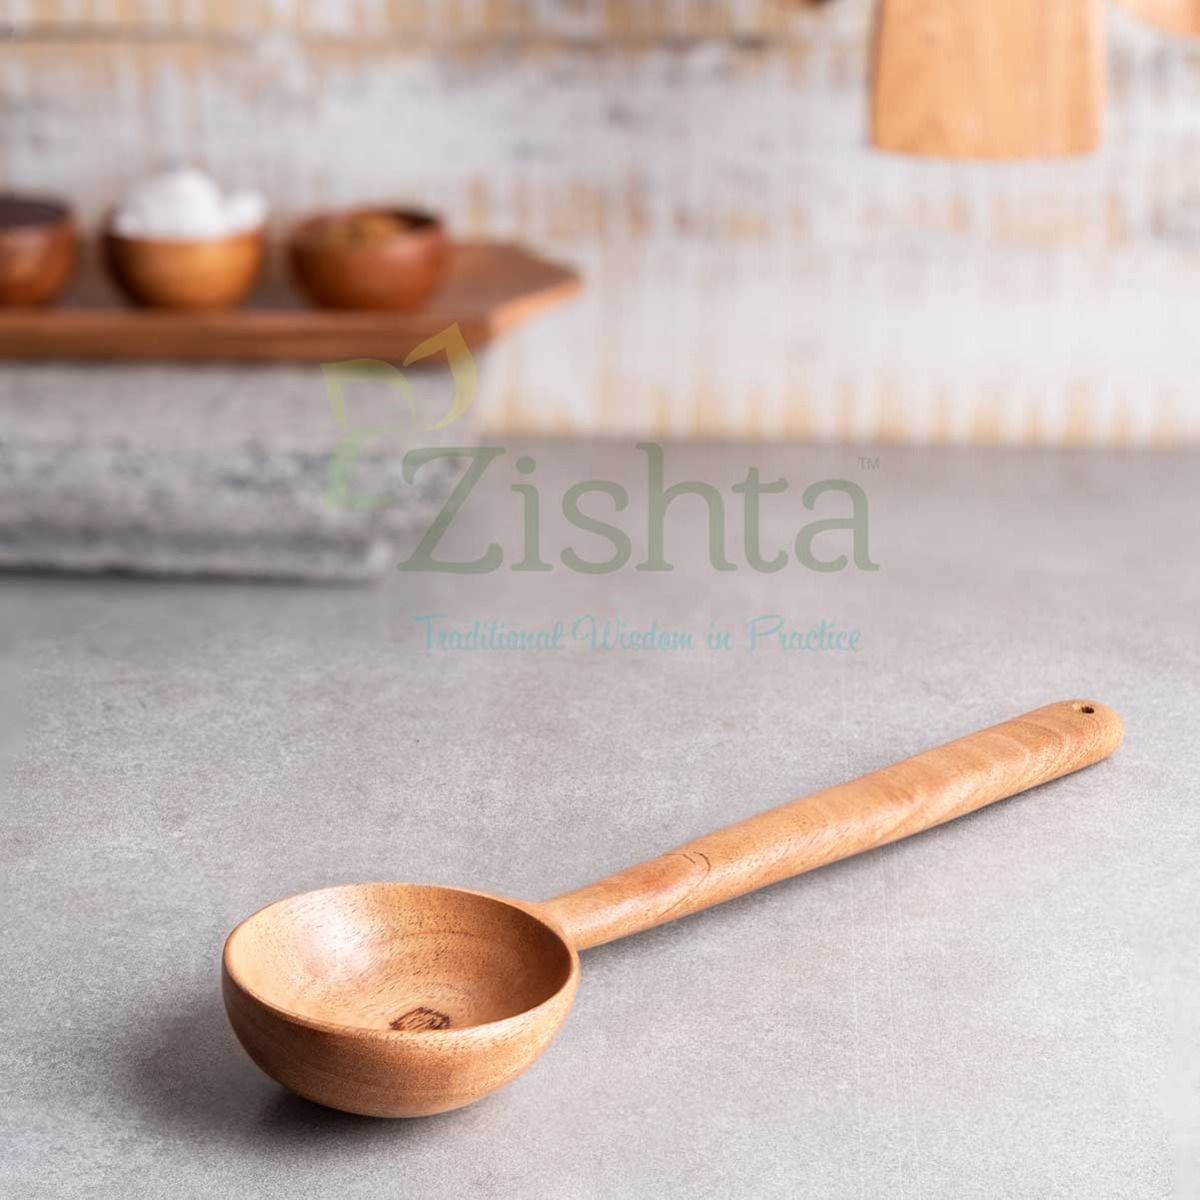 Neem Wood Gravy Ladle-Zishta Traditional Cookware